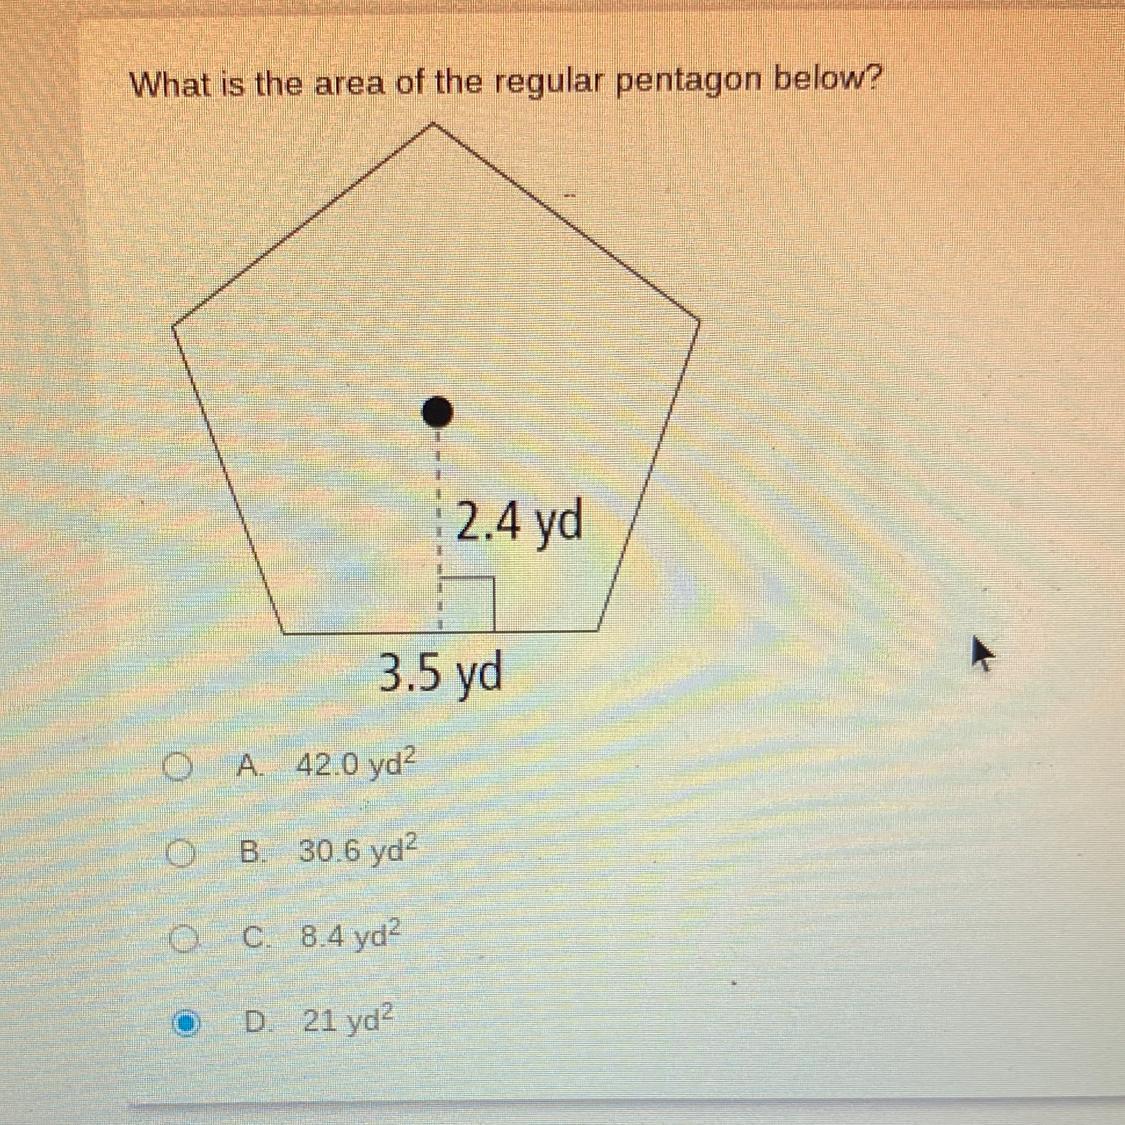 What Is The Area Of The Regular Pentagon Below?